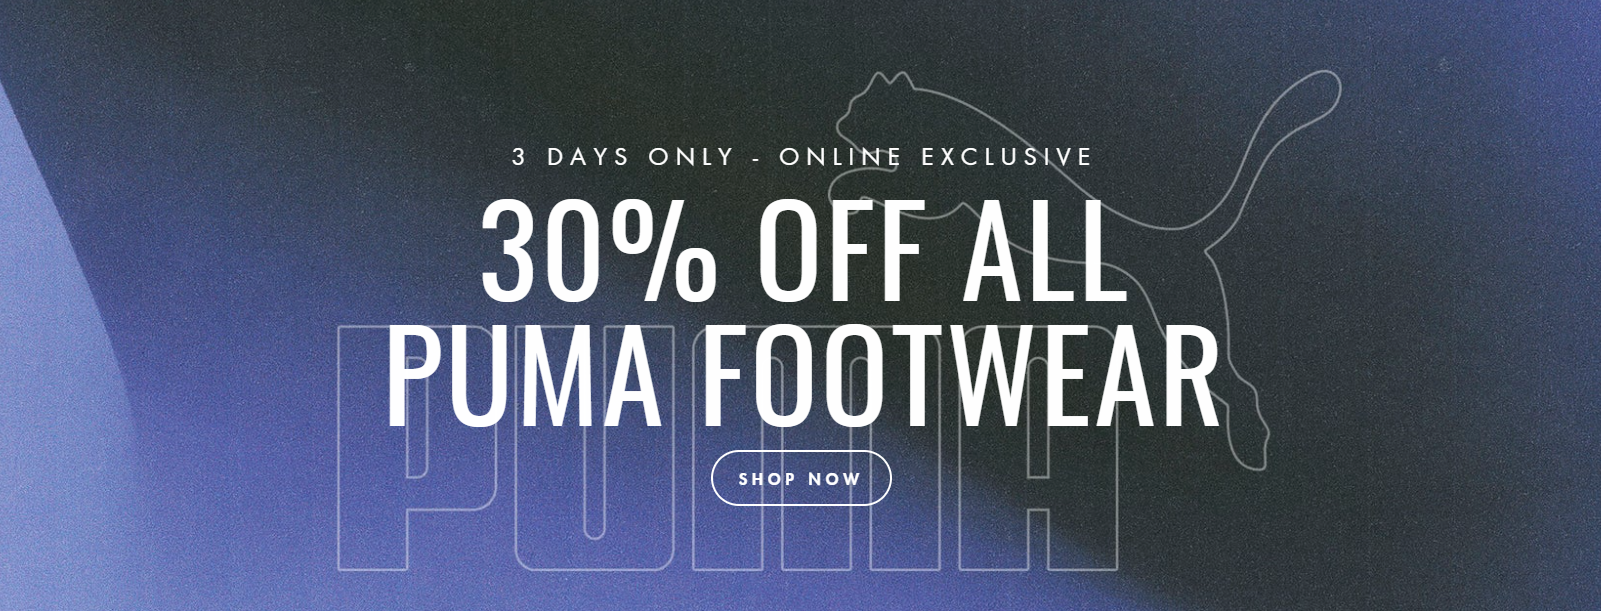 Insport 3-Day sale - 30% OFF all PUMA footwear, Free shipping $120+